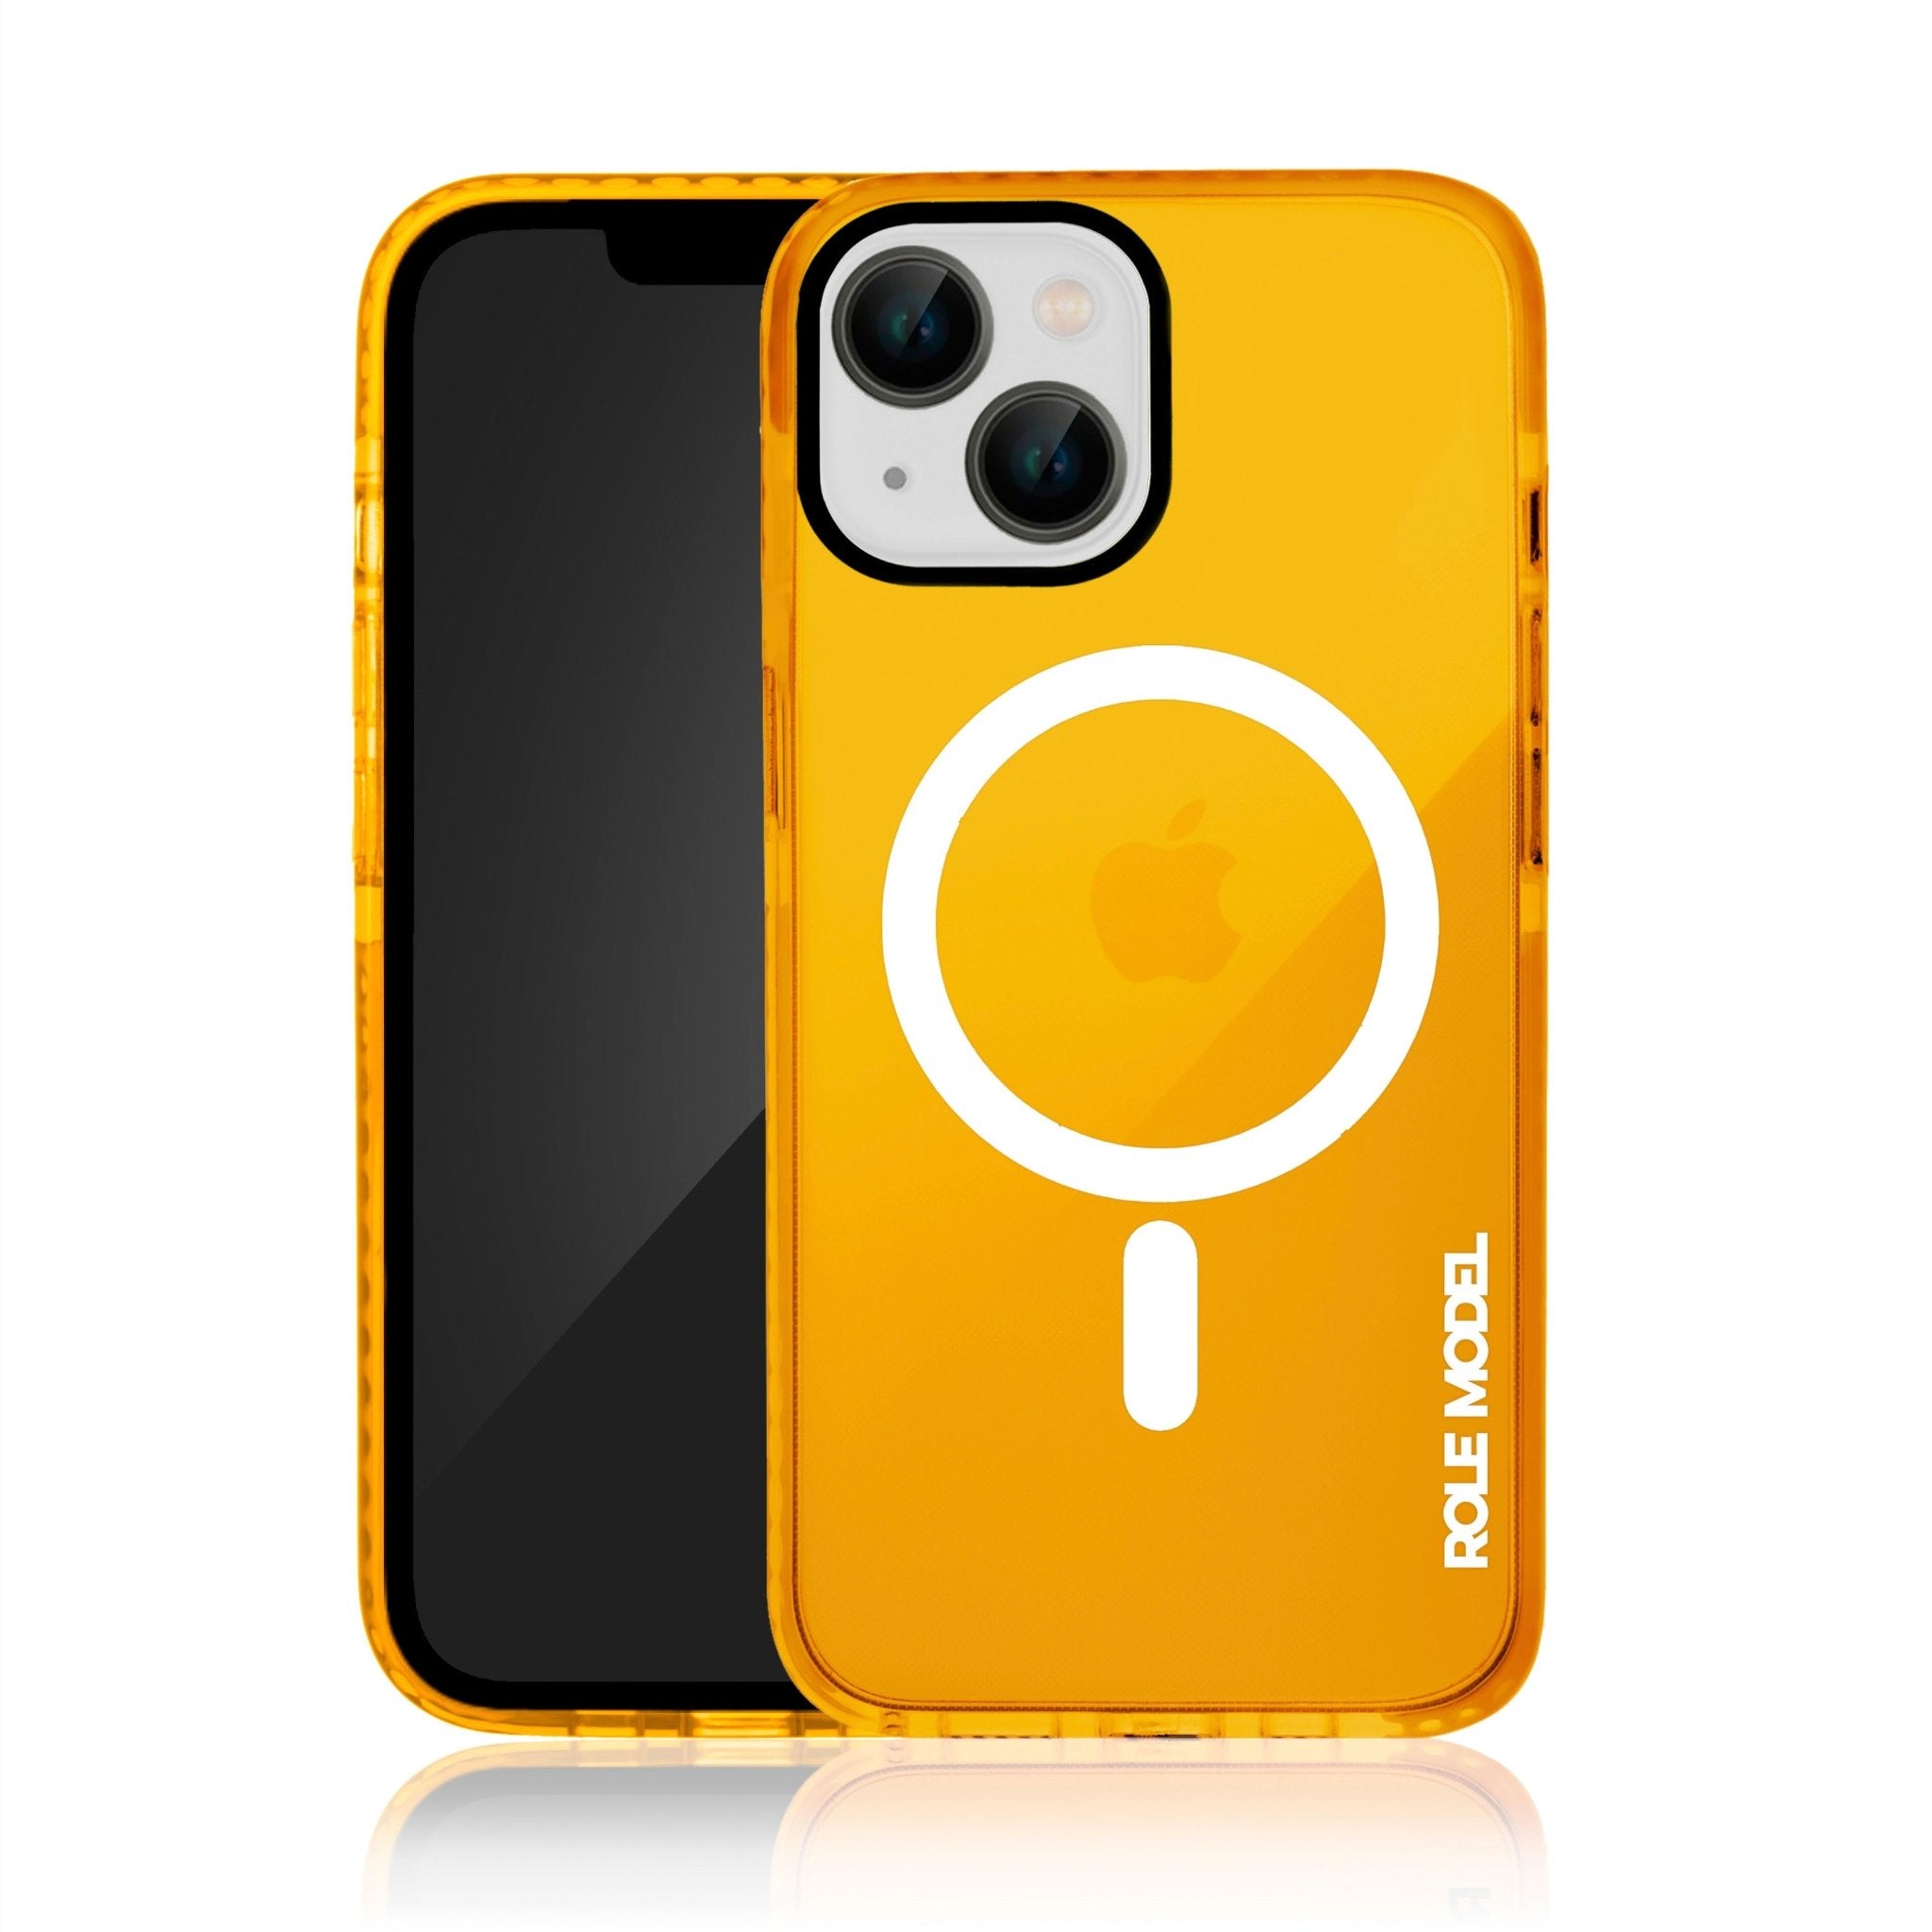 Cybercase™ Safety Orange Edition - ROLE MODEL